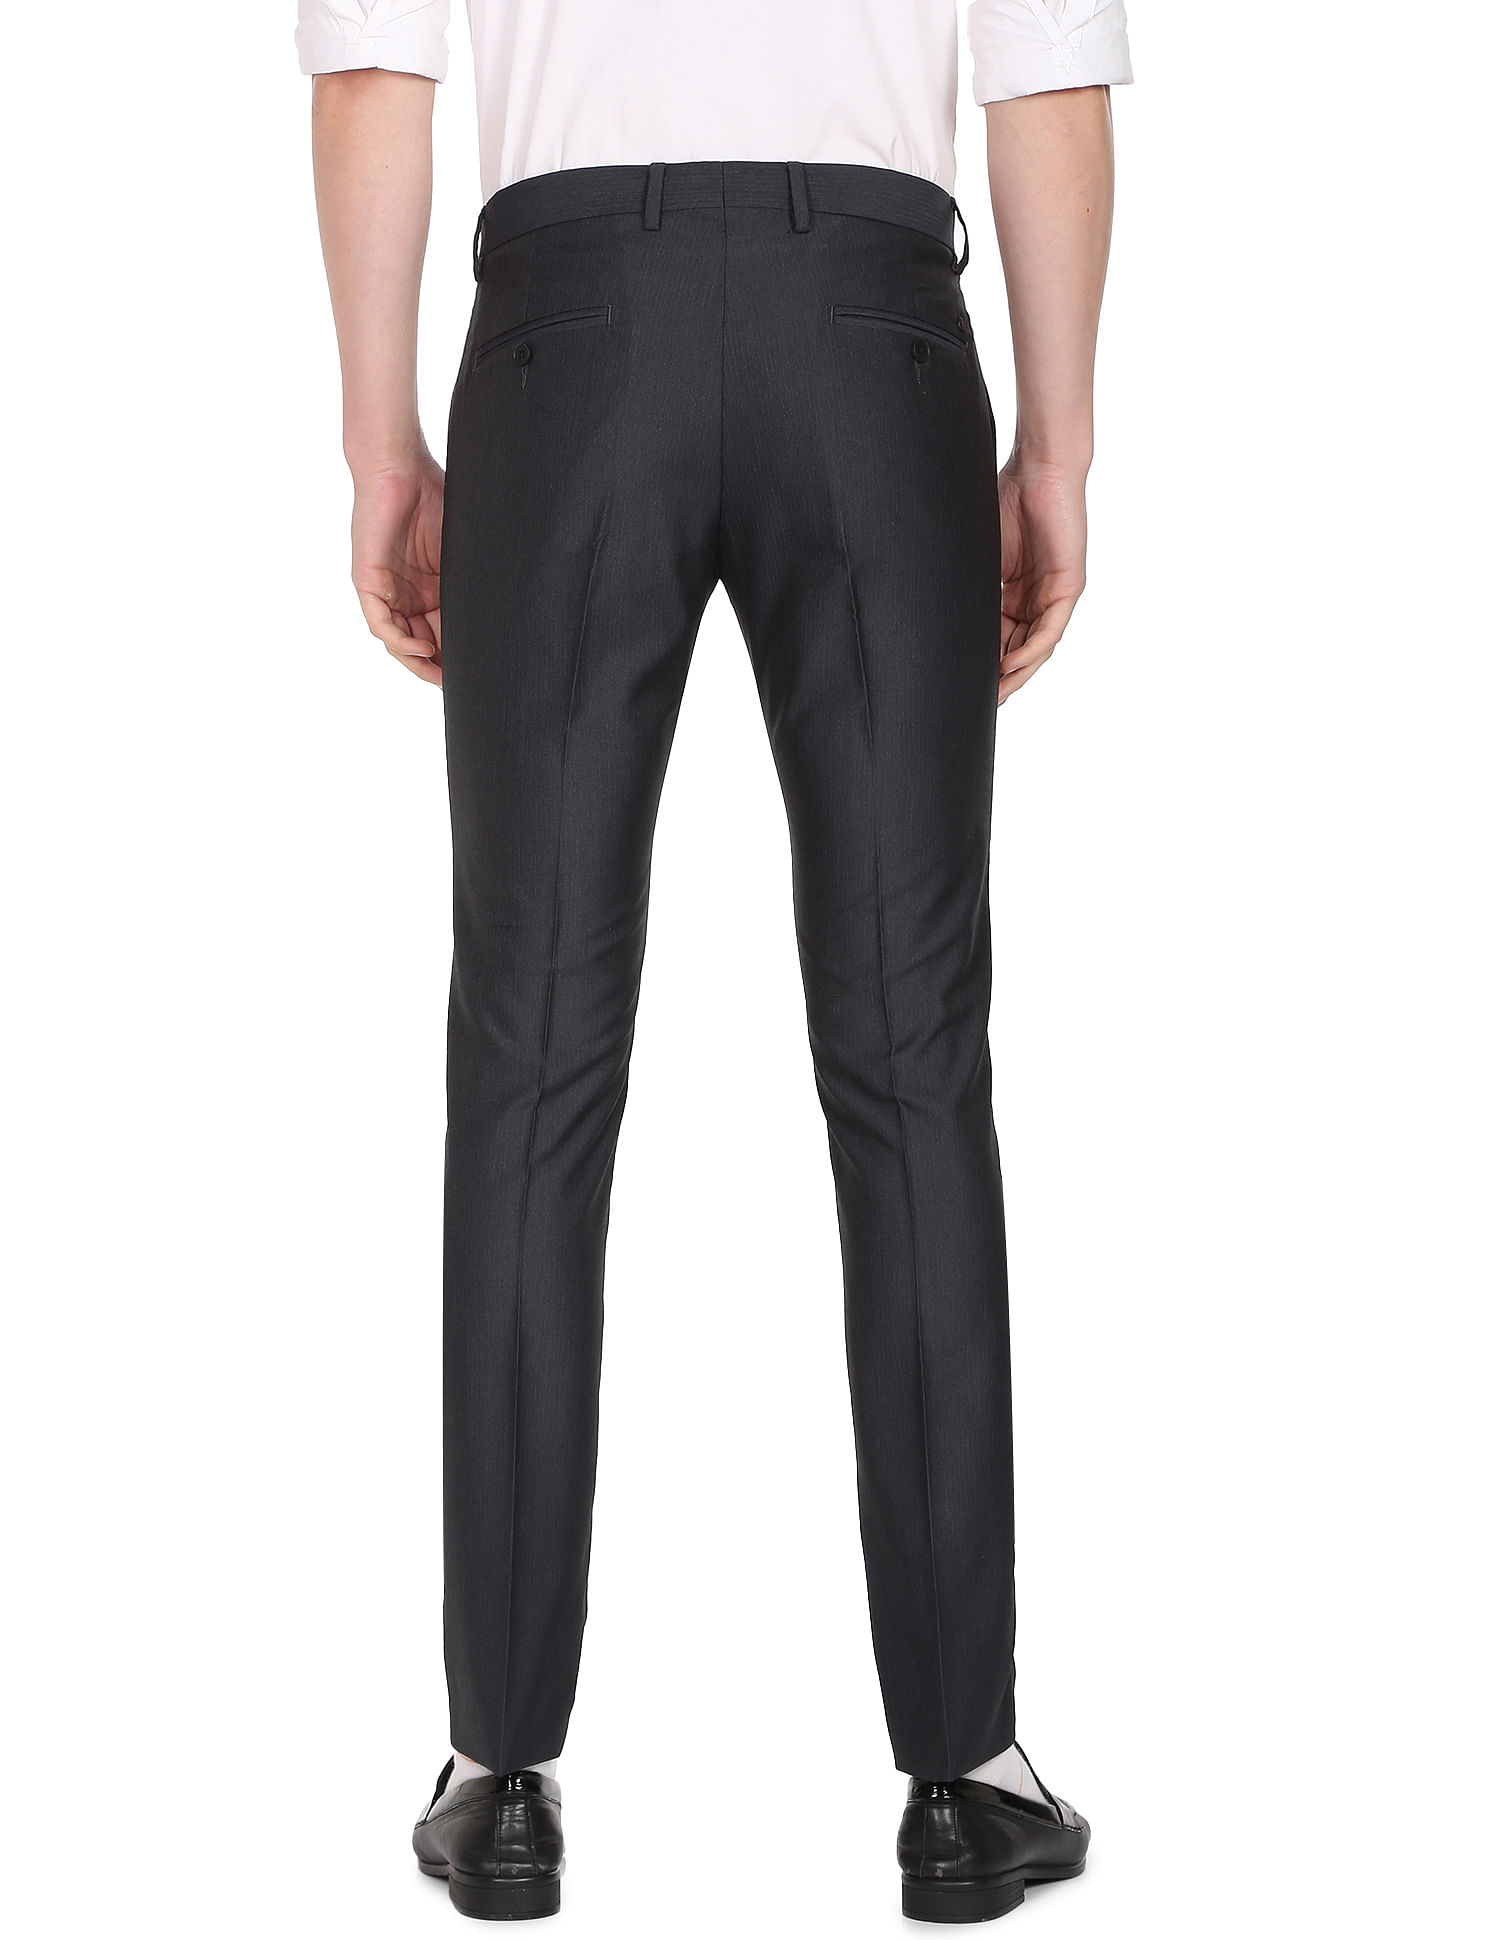 Black Tuxedo Suit Trousers | Men | George at ASDA